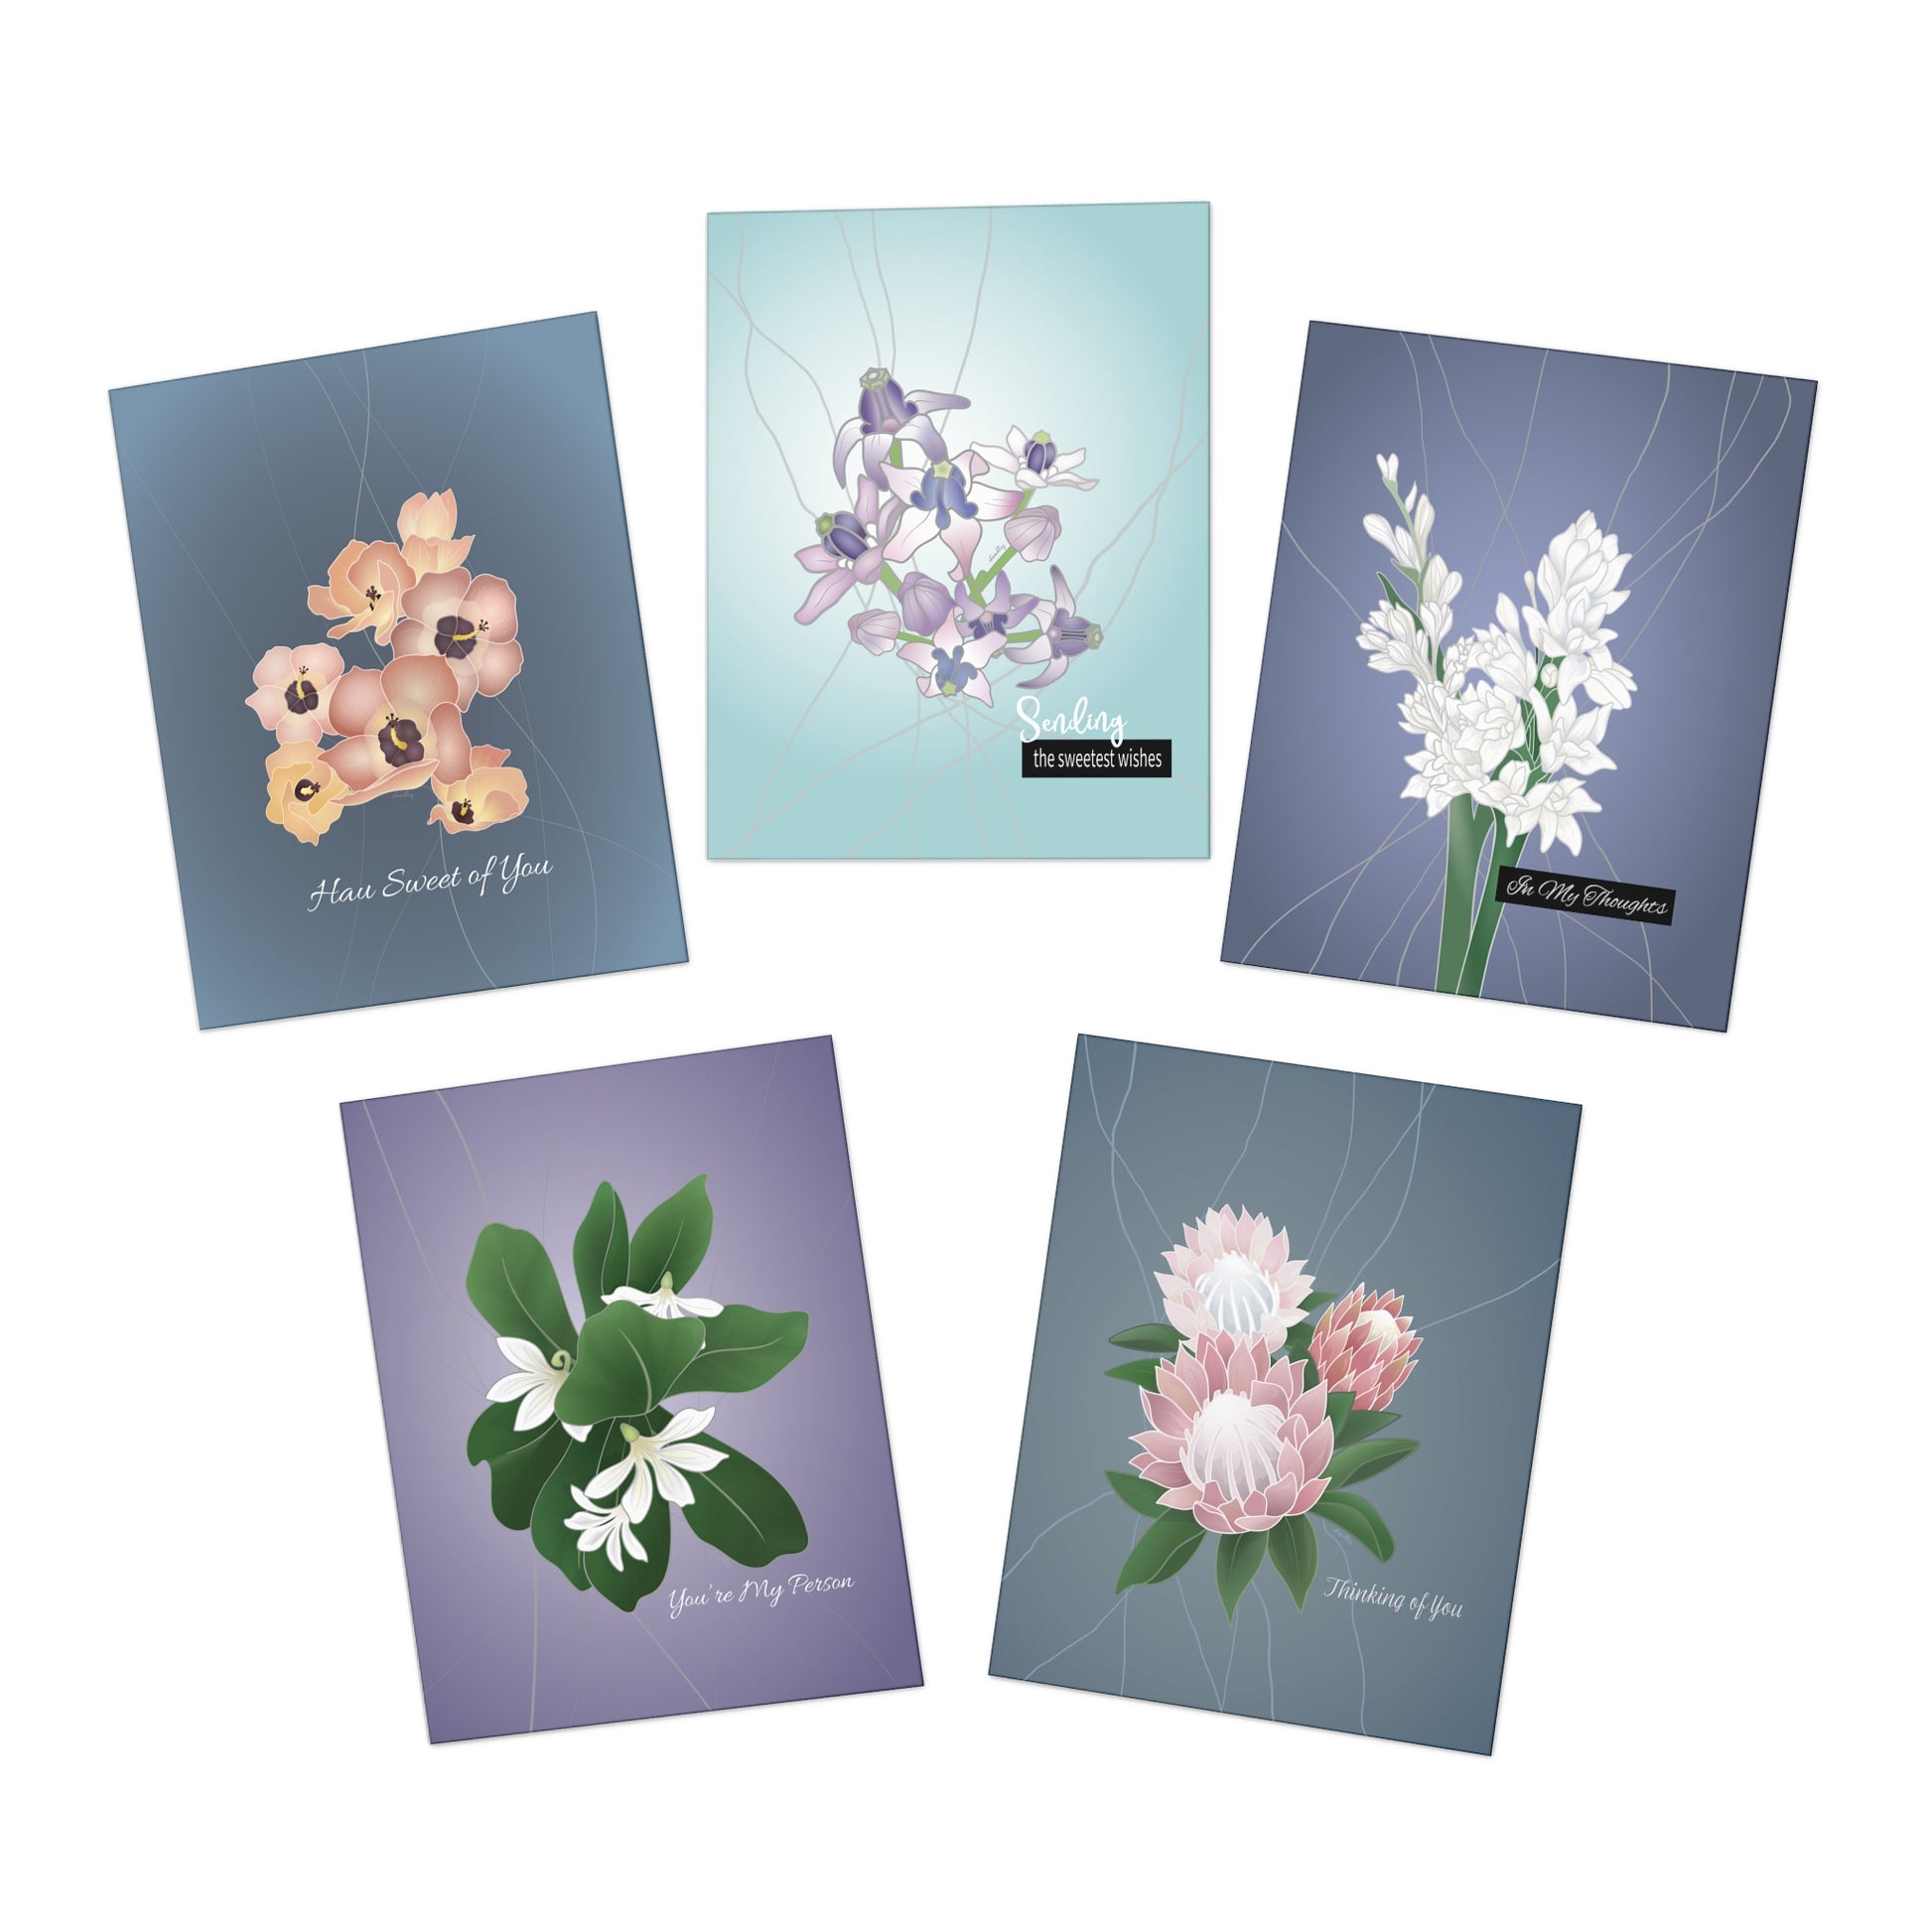 Crown flower, Hau Hibiscus, Tuberose, Naupaka and Protea flower greeting card set. 